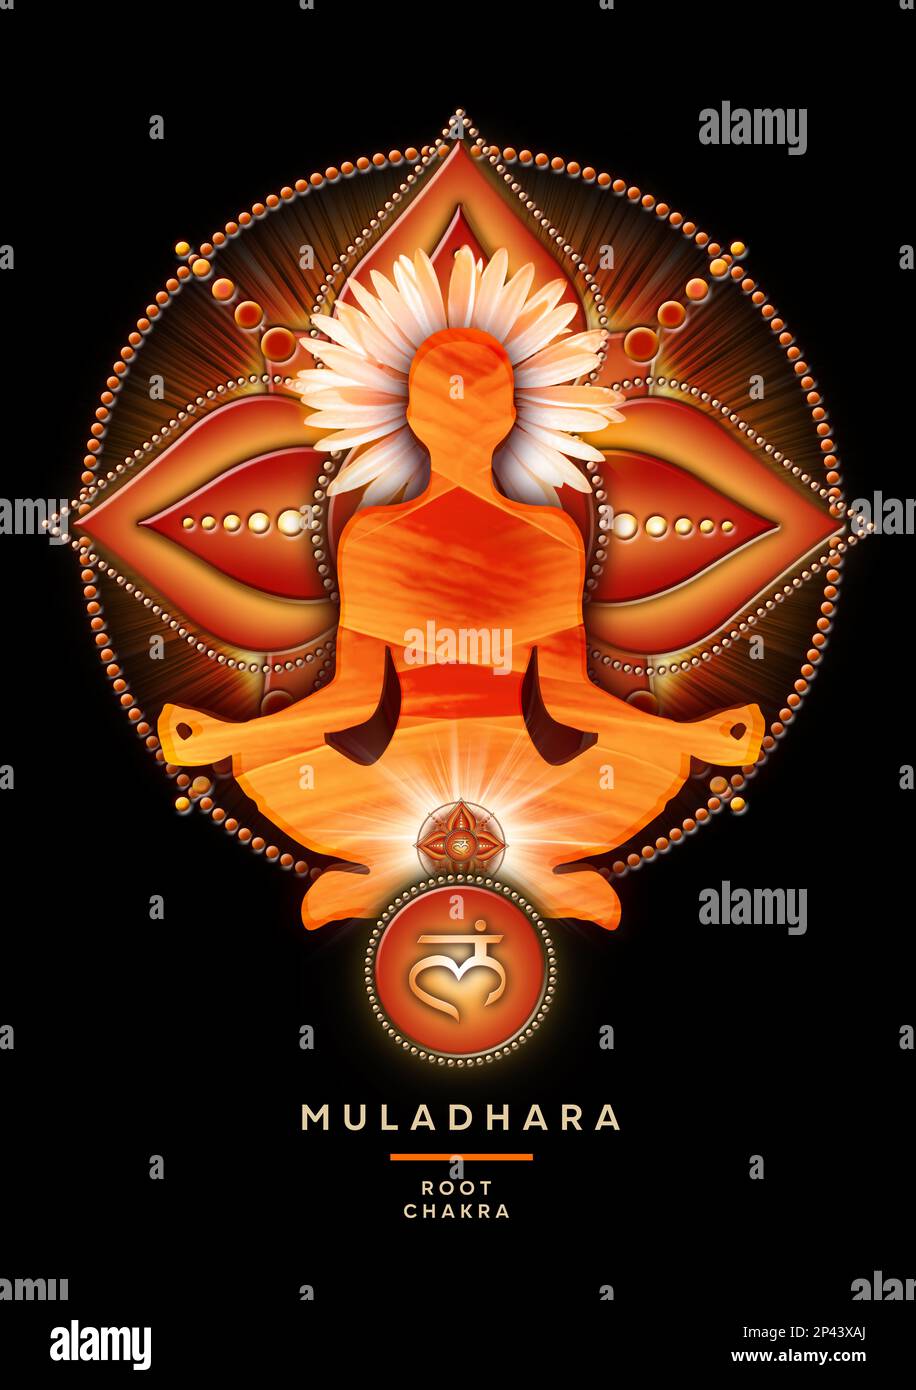 Cleanse Your Root Chakra: 30 Min Kundalini Yoga Flow - YouTube